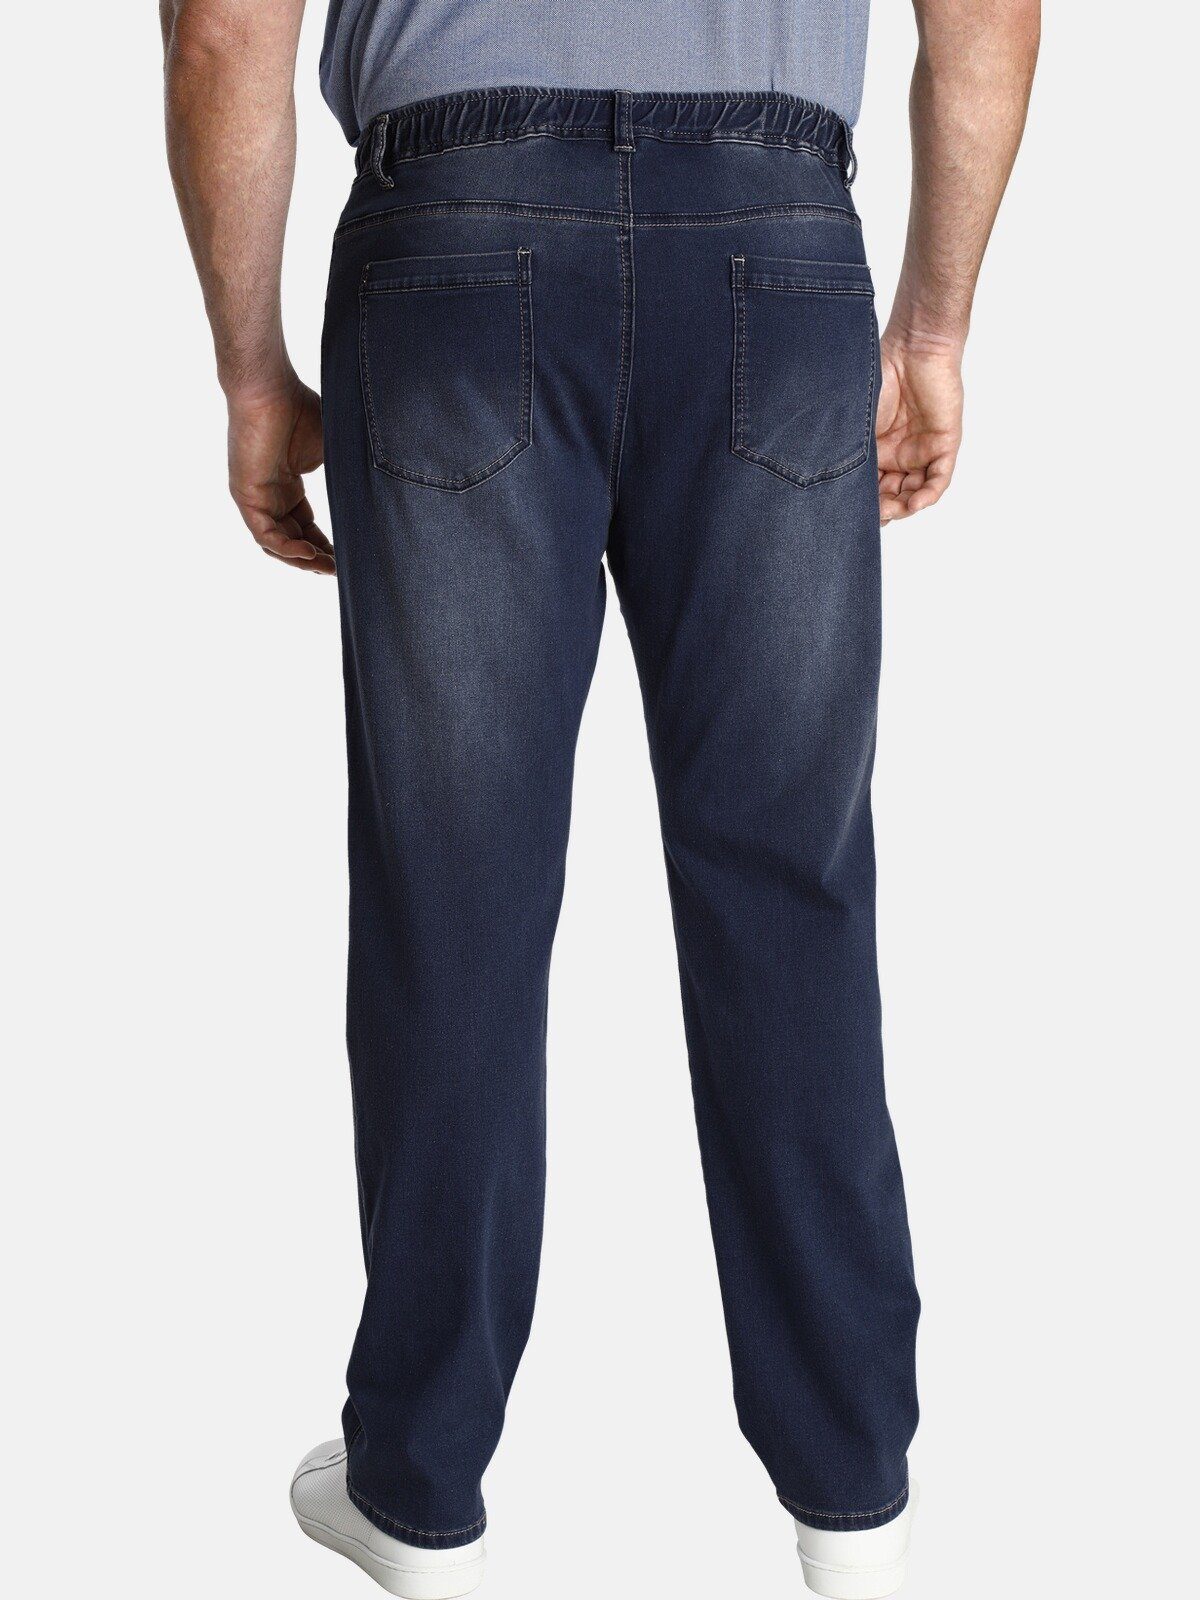 Charles Colby 5-Pocket-Jeans BARON KEYLAN dunkelblau so bequem wie Jogginghose eine